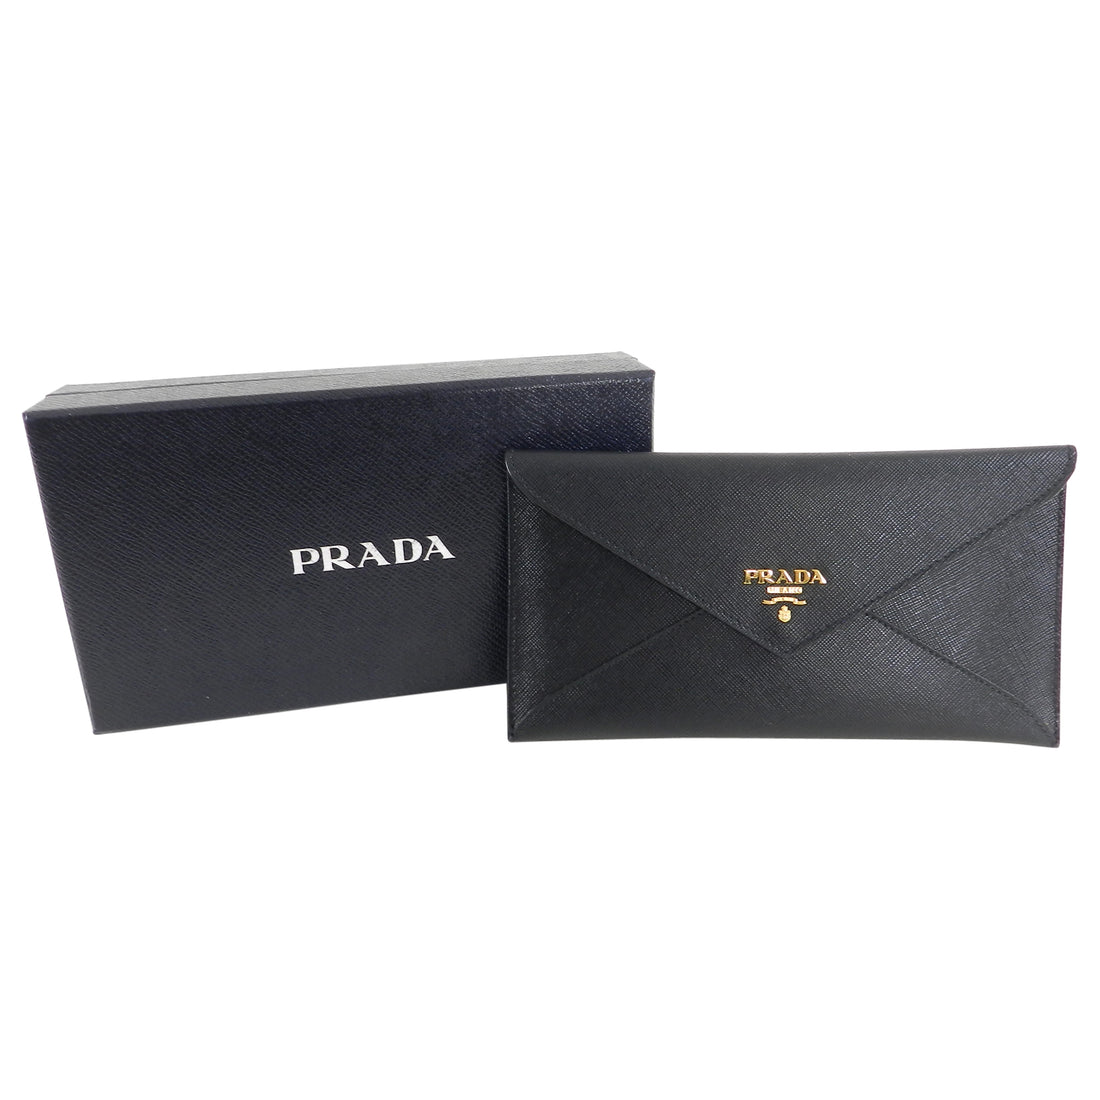 Prada Black Saffiano Leather Envelope Wallet